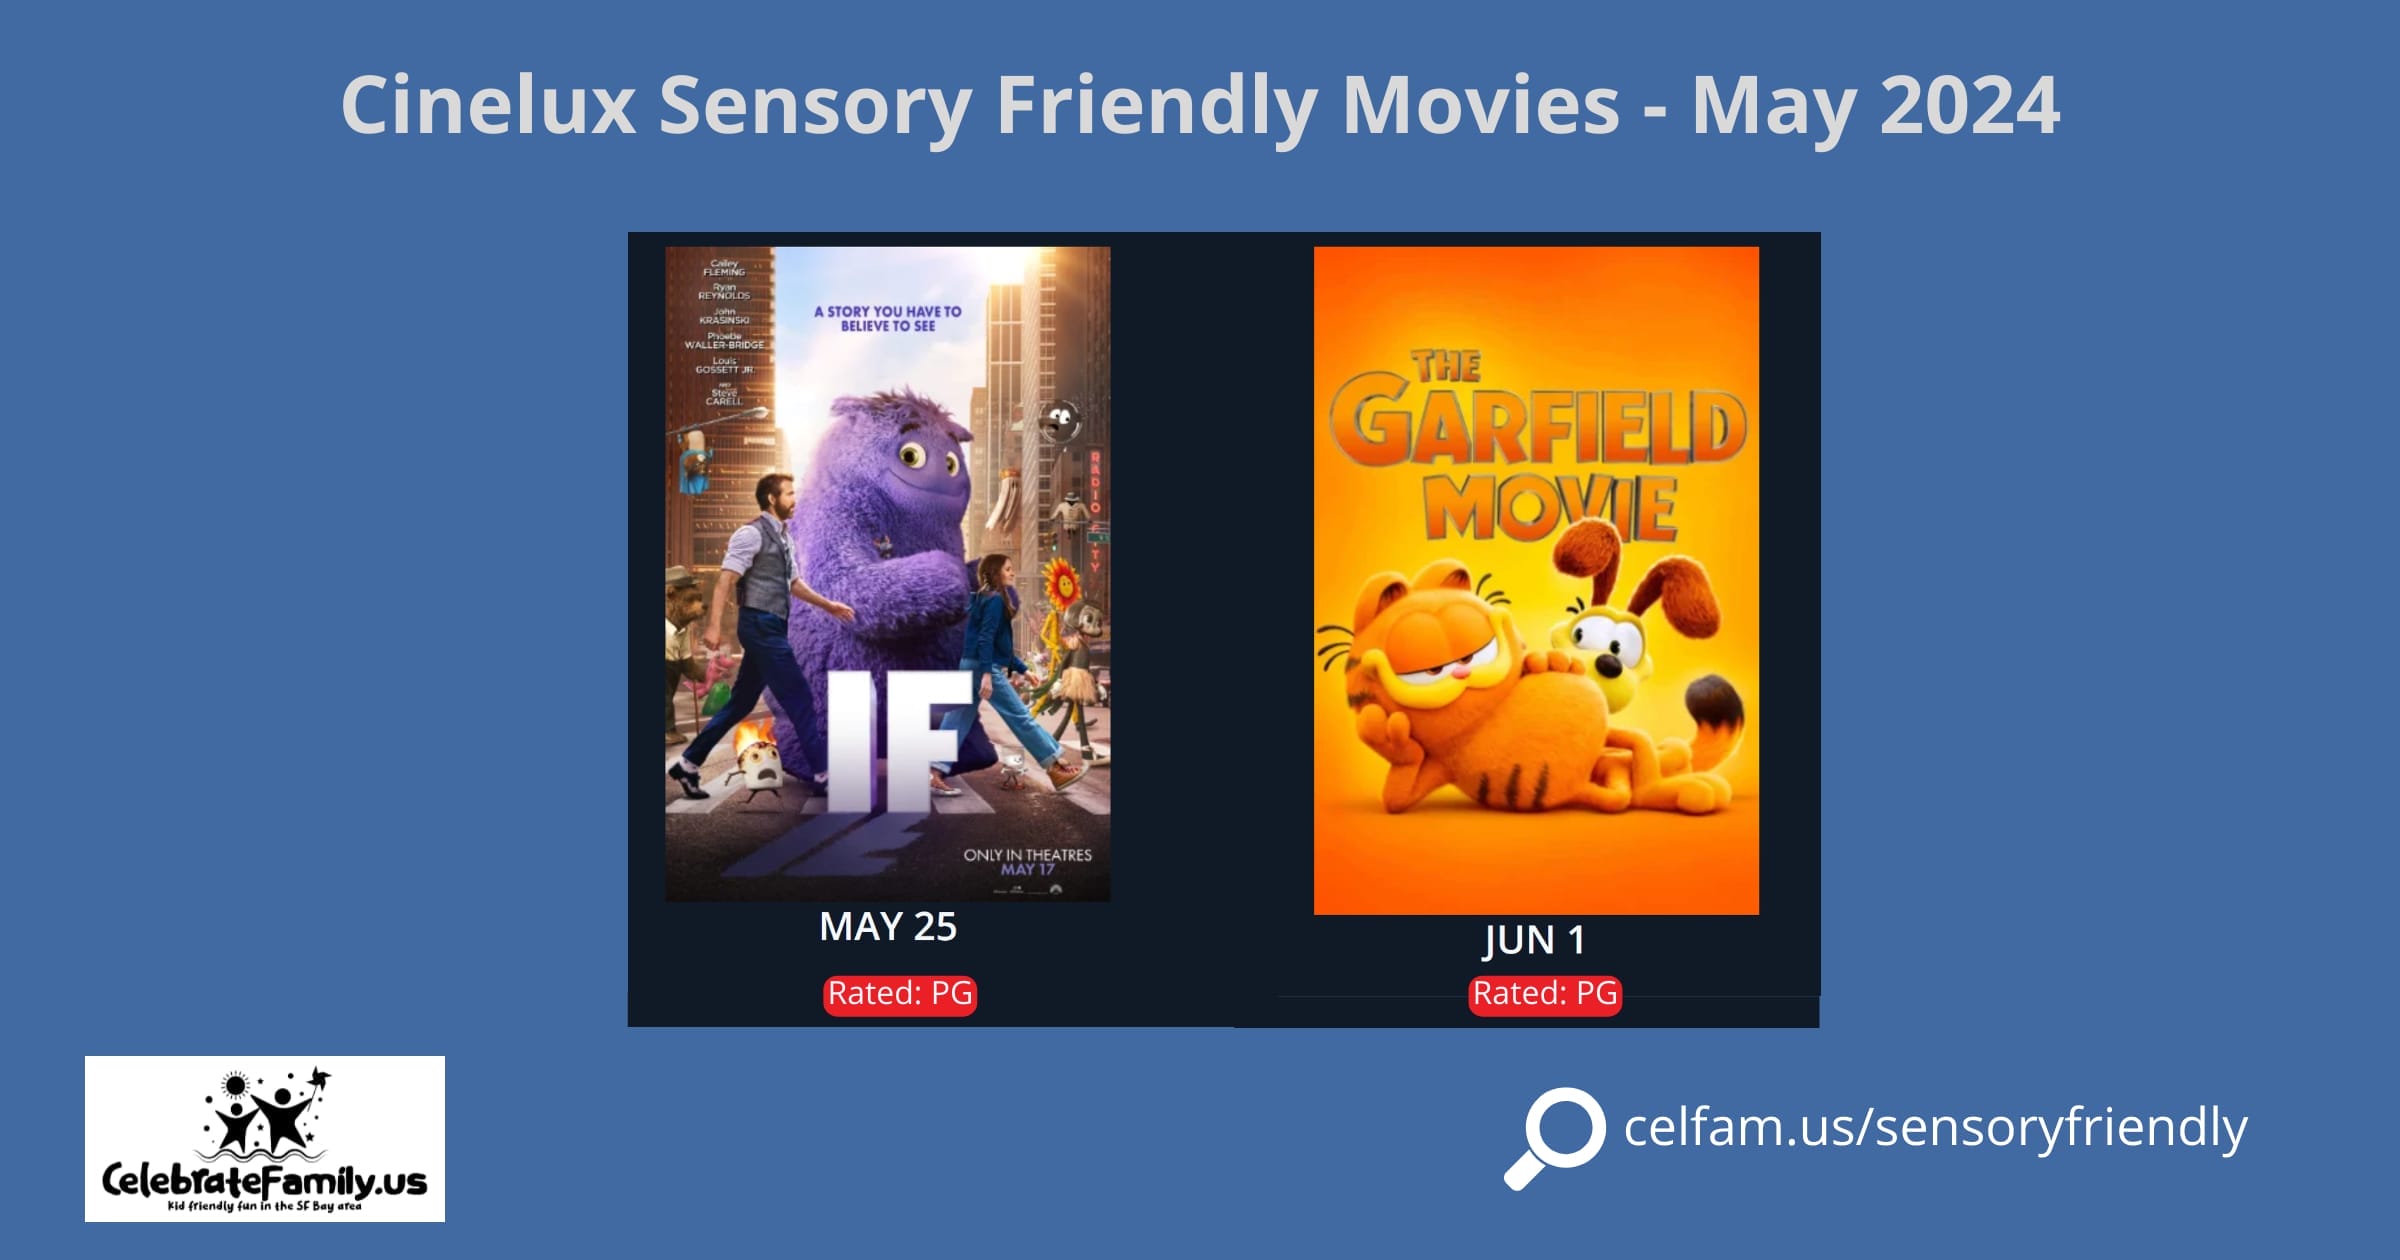 Cinelux Sensory Friendly Movies - May 2024